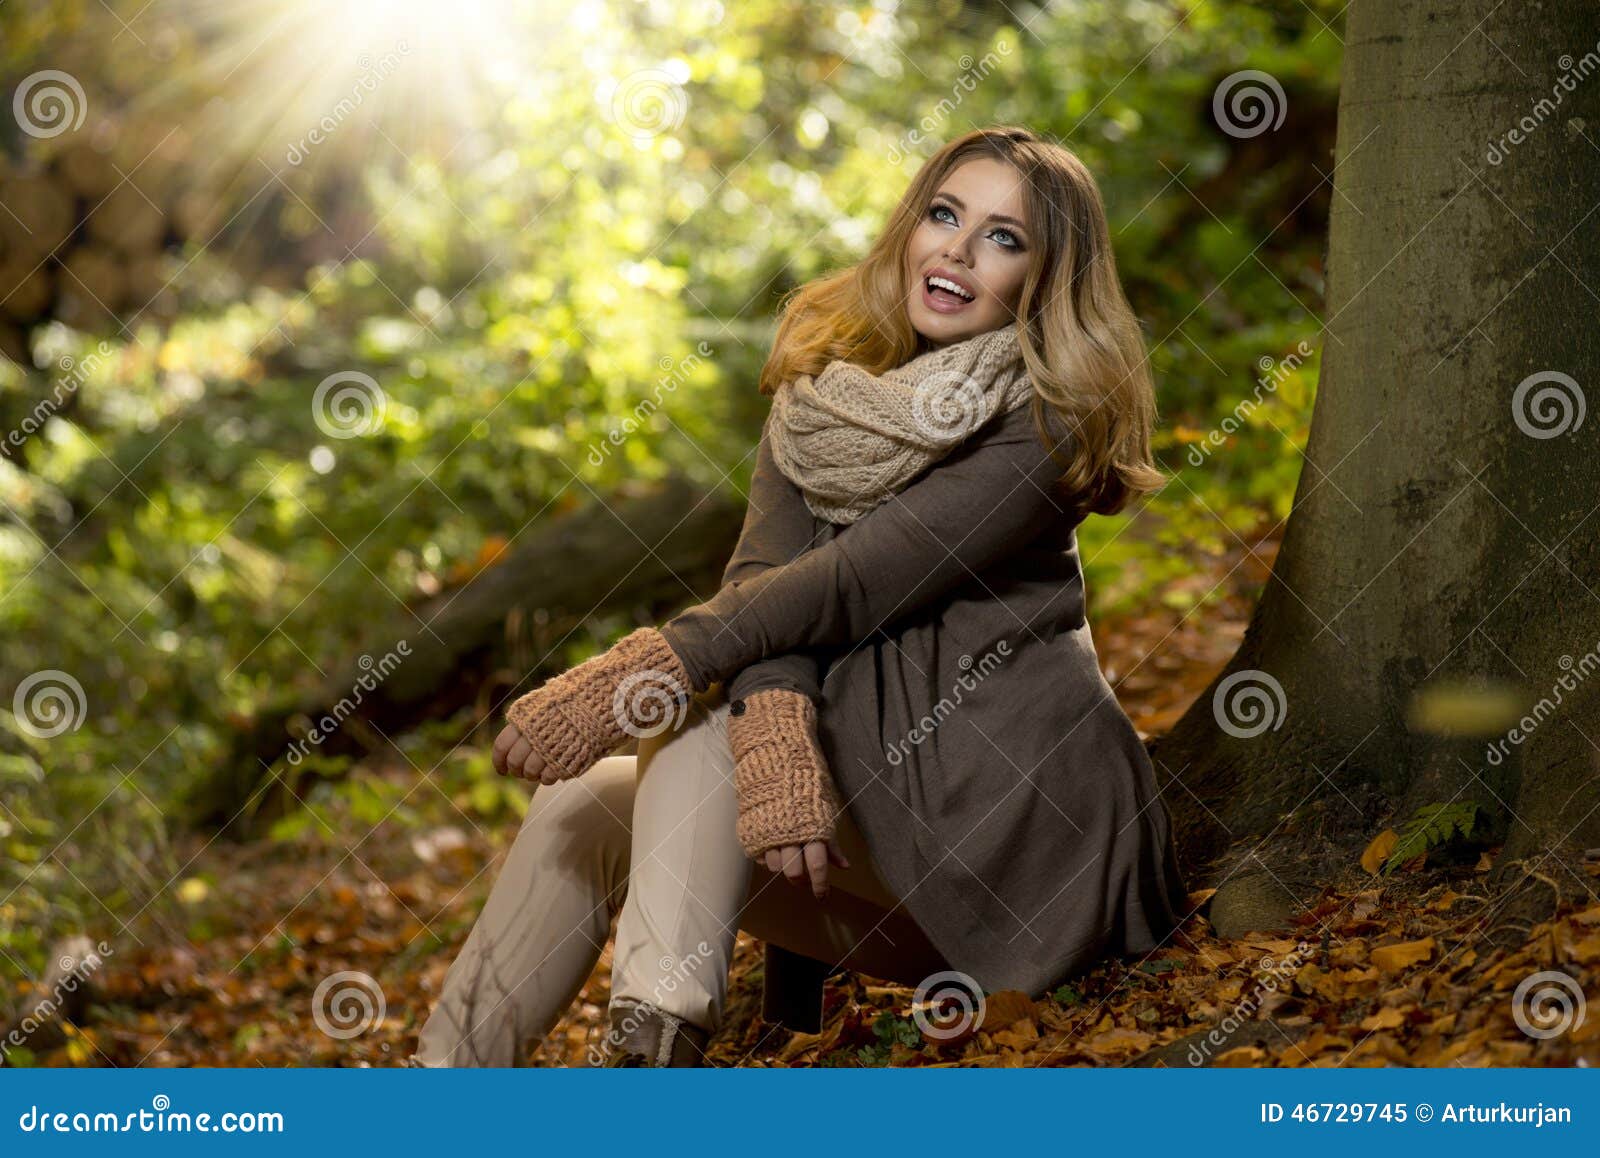 Beautiful Elegant Woman in Park - Autumn Stock Image - Image of nature ...